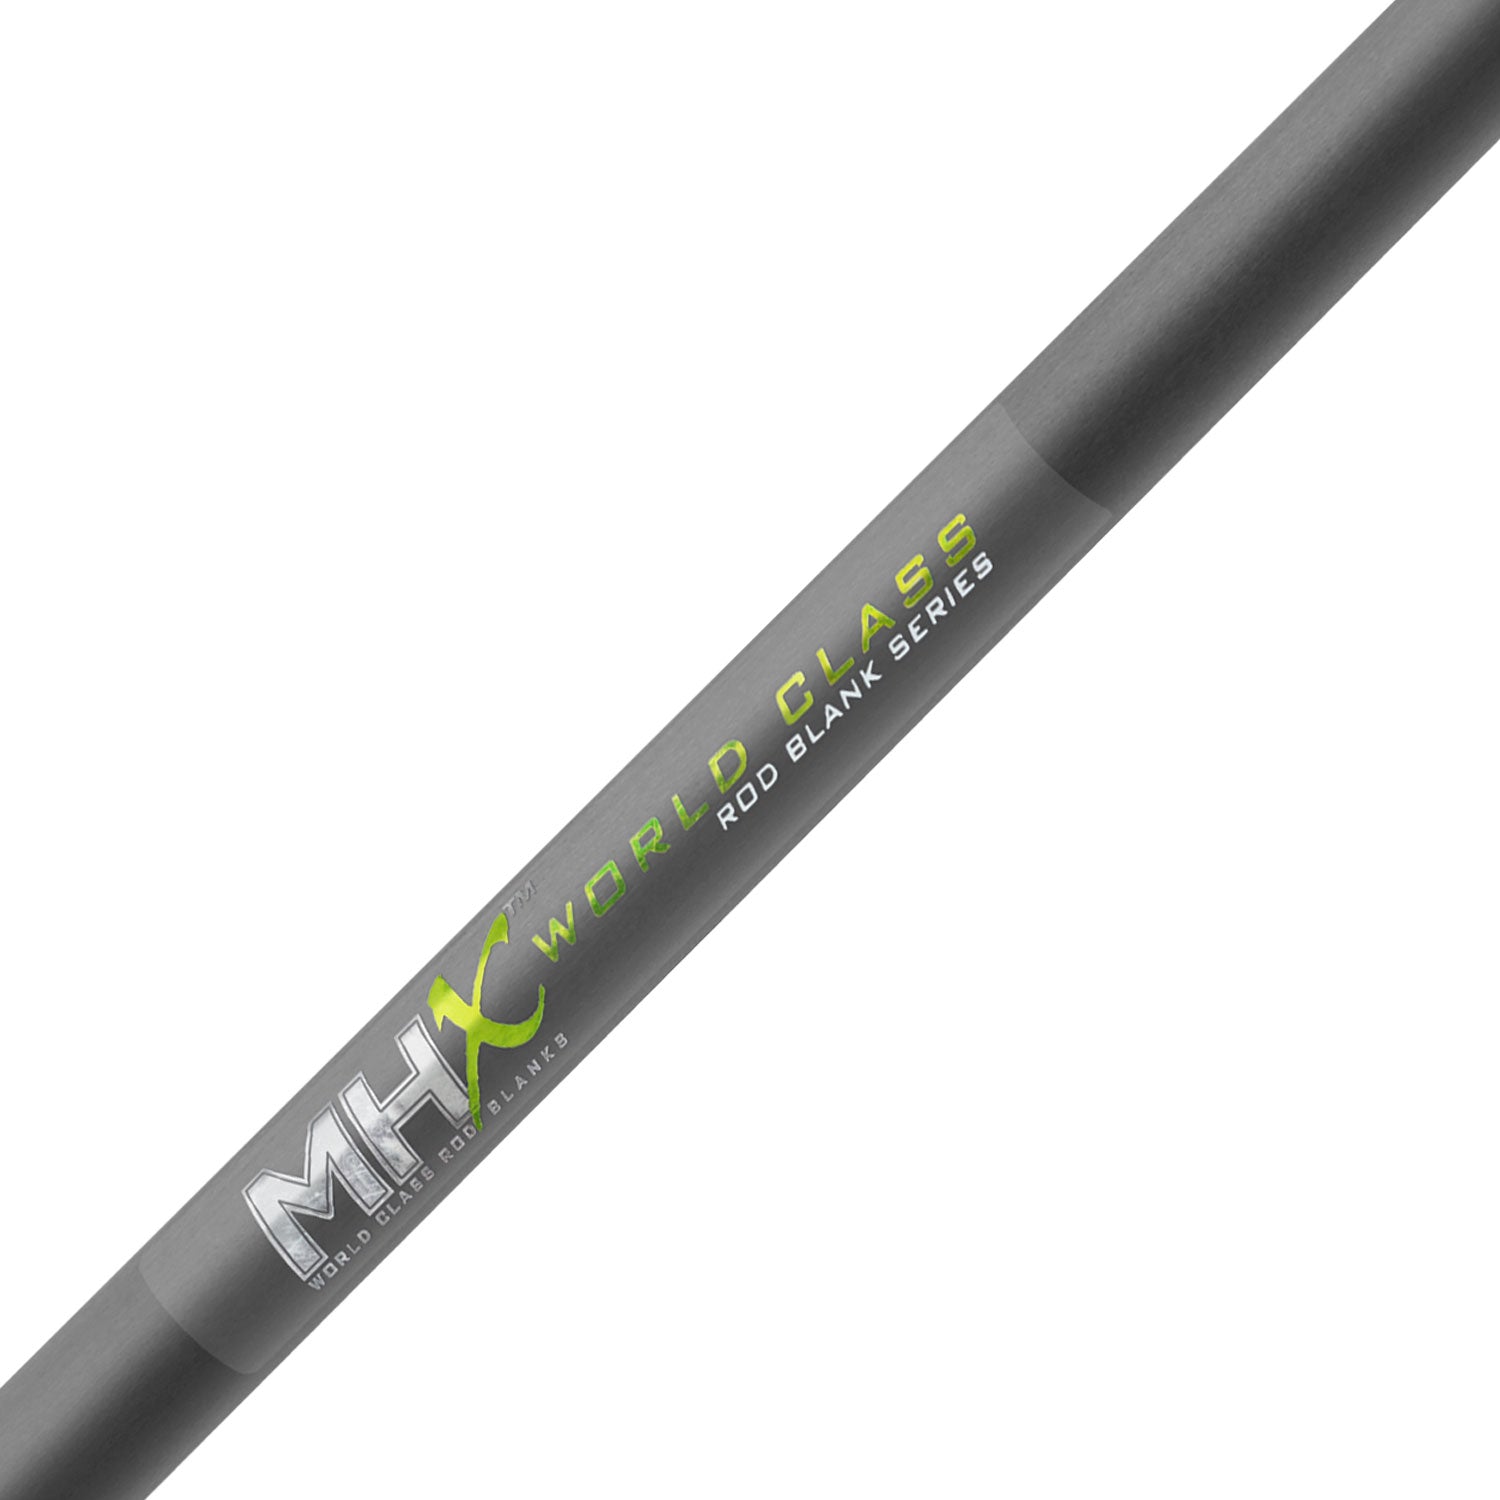 MHX 8'0" X-Heavy Flipping Stick Rod Blank - FS966-MHX